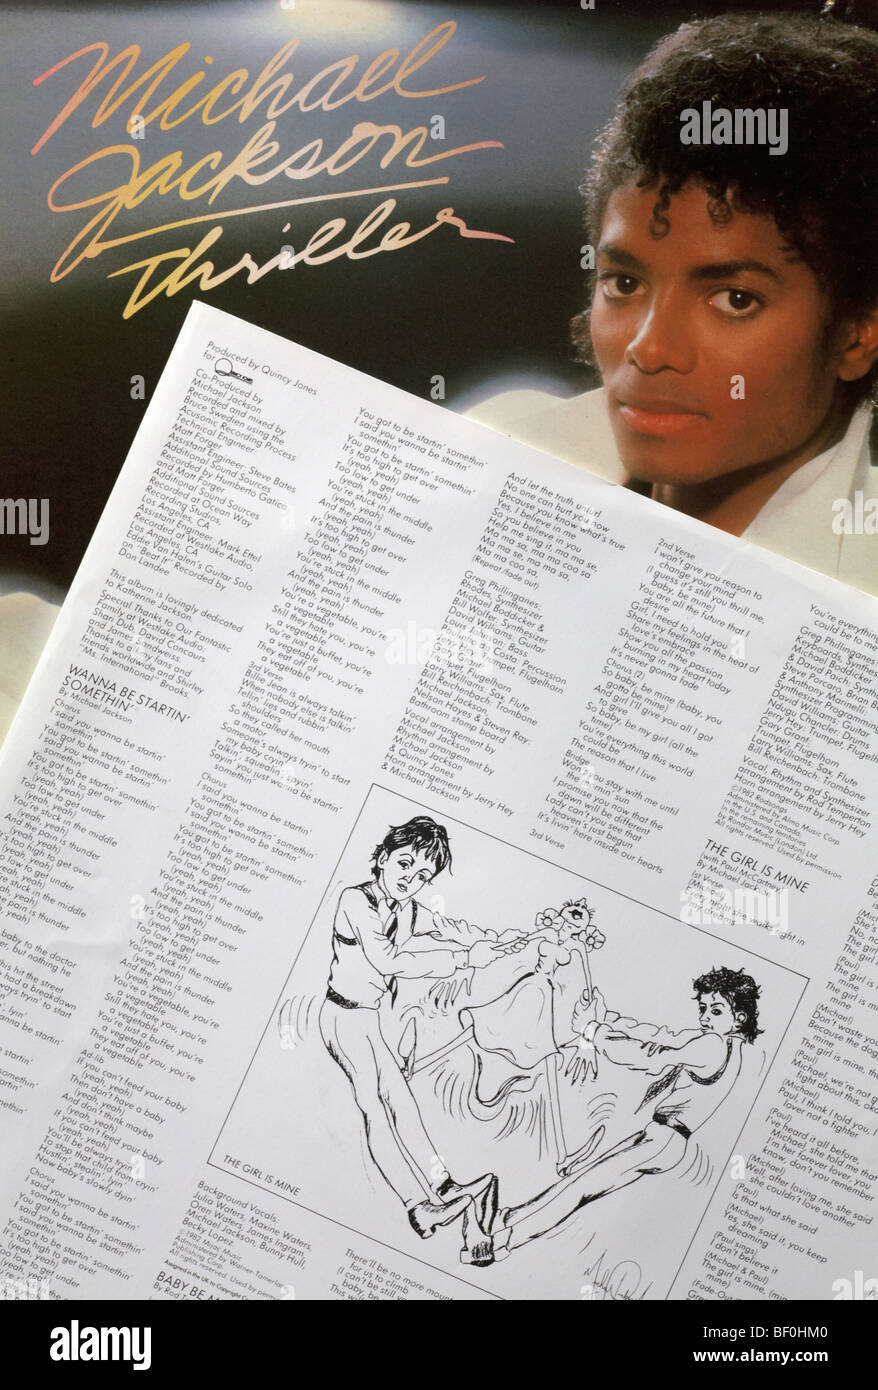 Michael Jackson Thriller album e testi inserire Foto stock - Alamy